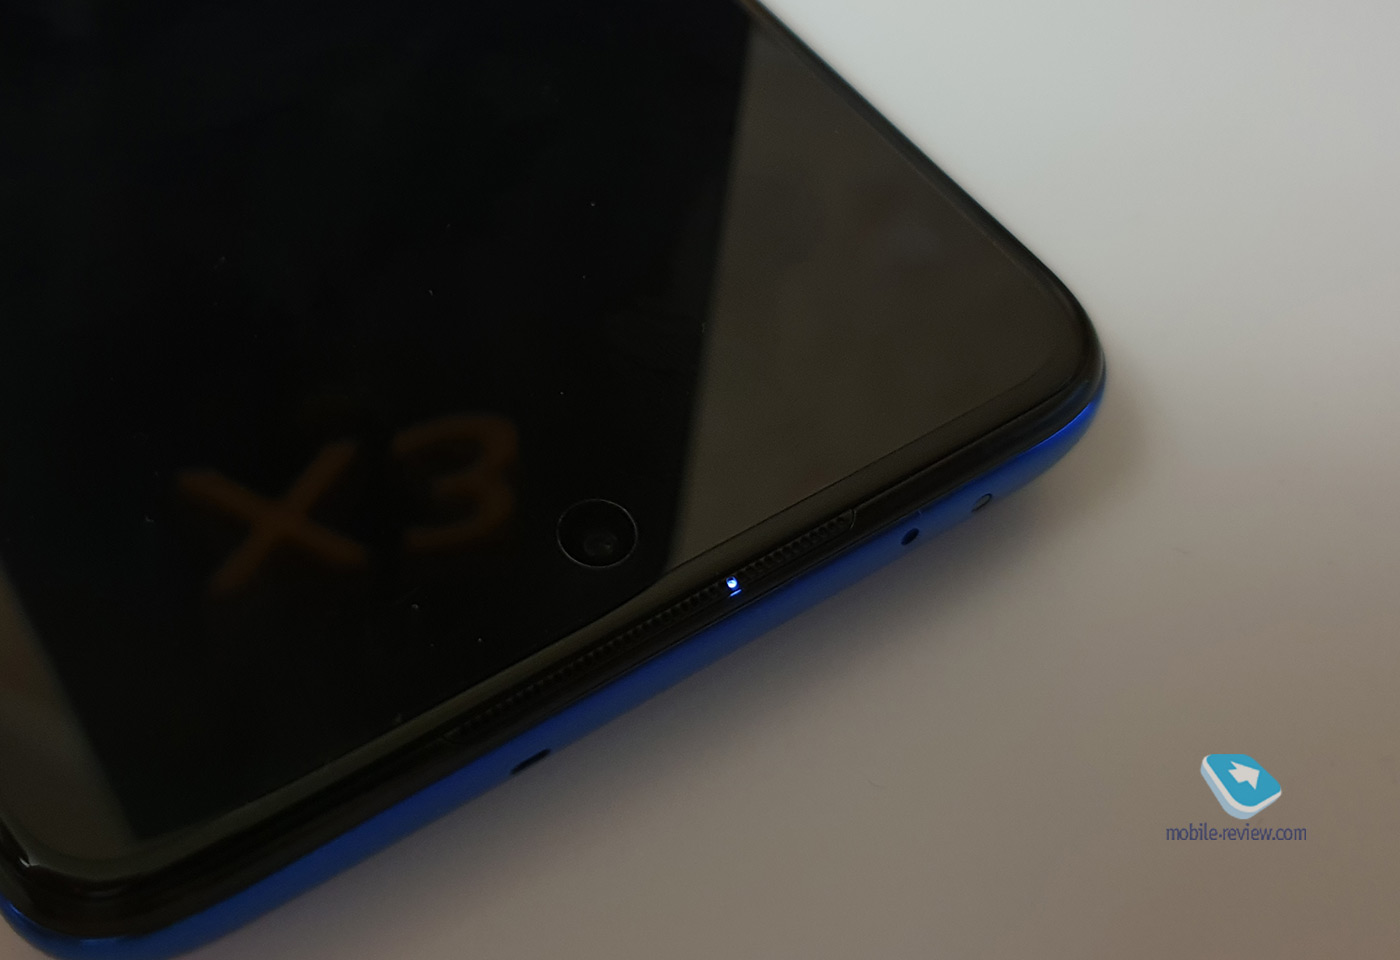 Fall's premier smartphone: Poco X3 NFC